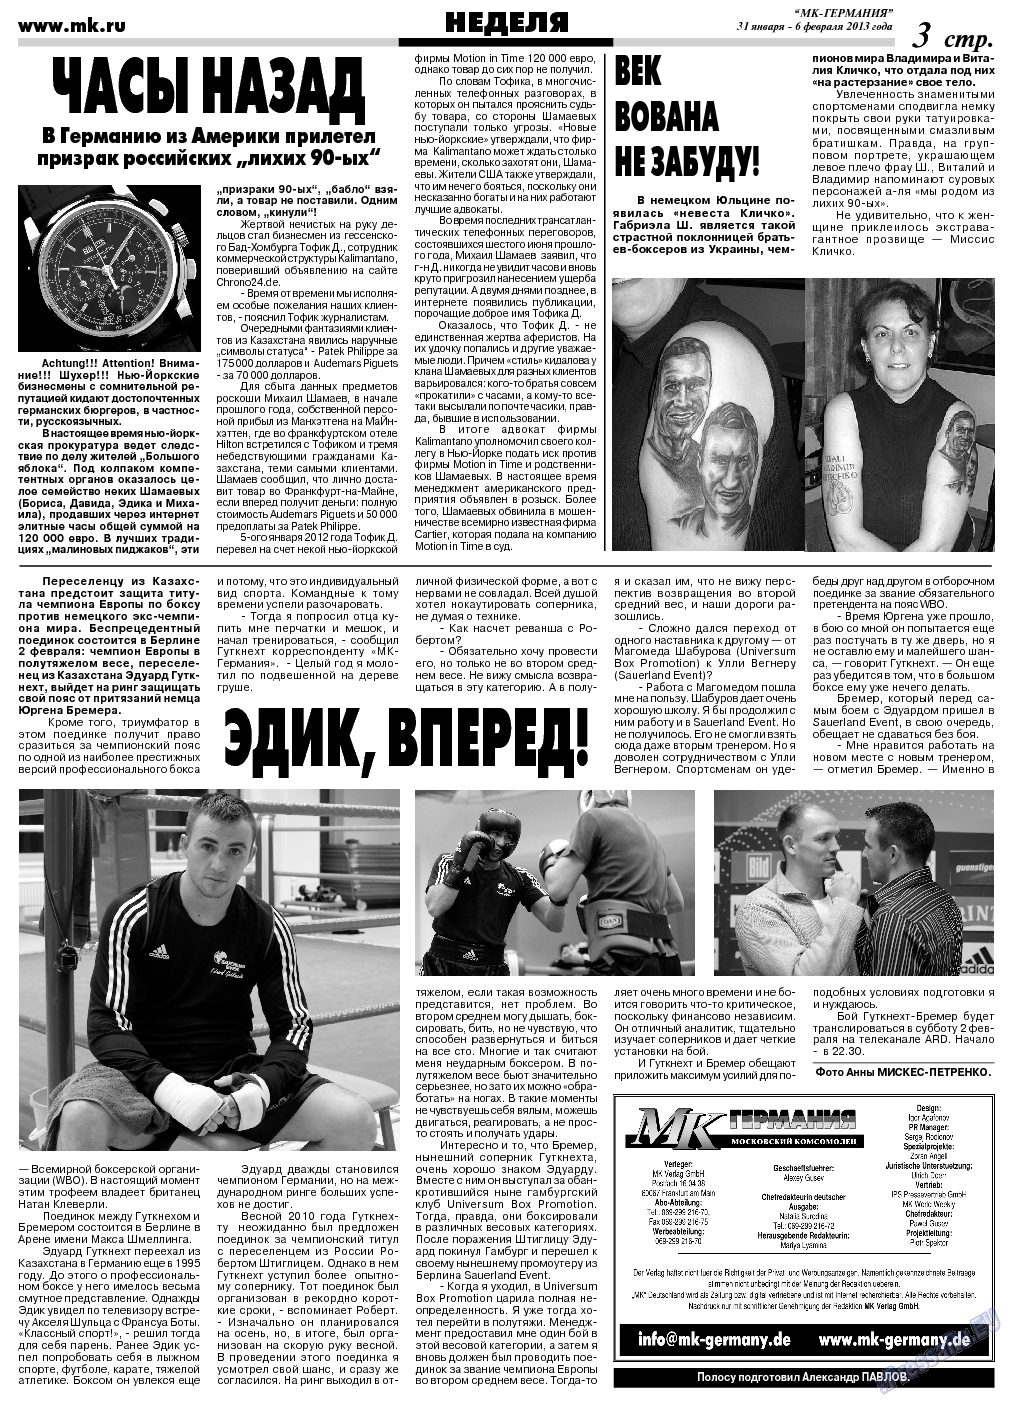 МК-Германия, газета. 2013 №5 стр.3